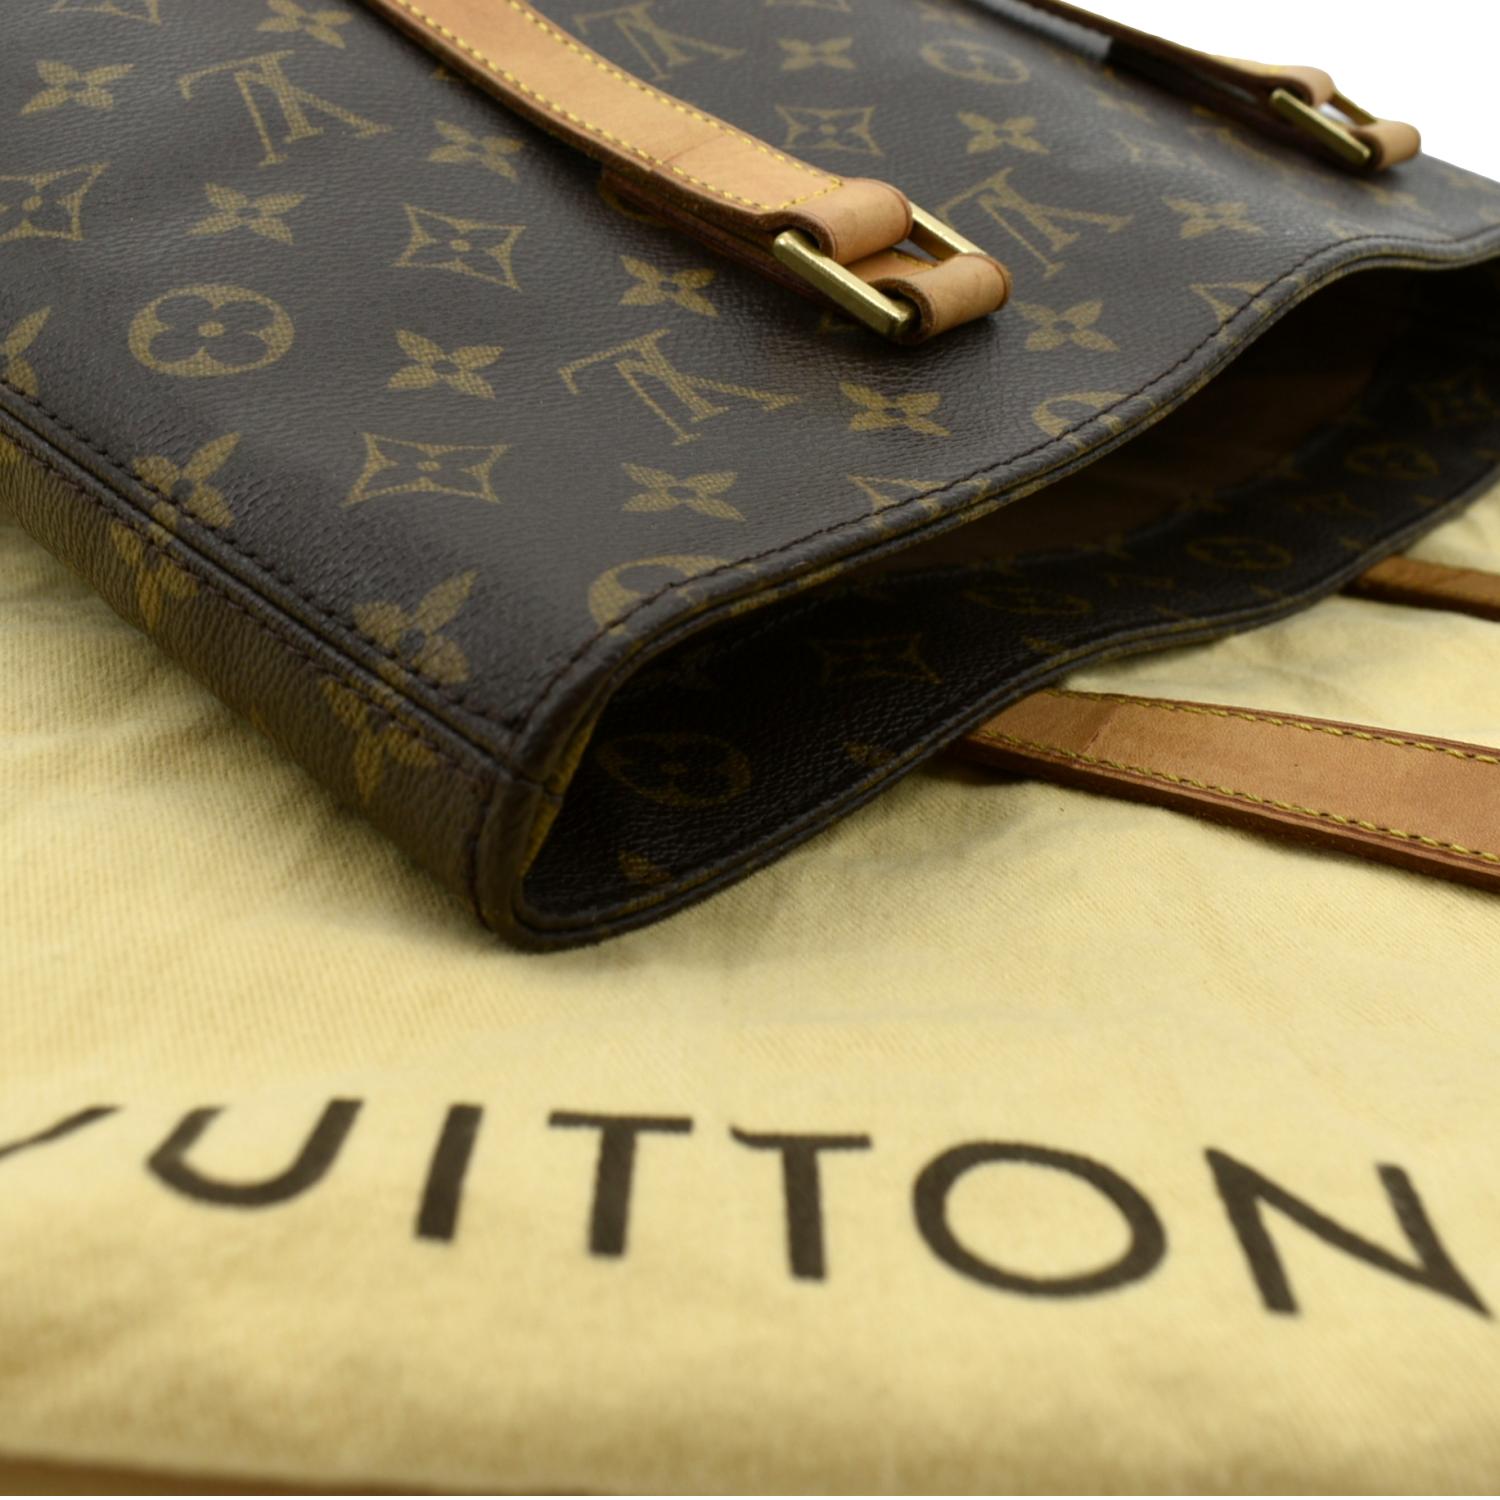 Louis Vuitton Vavin Gm Shoulder